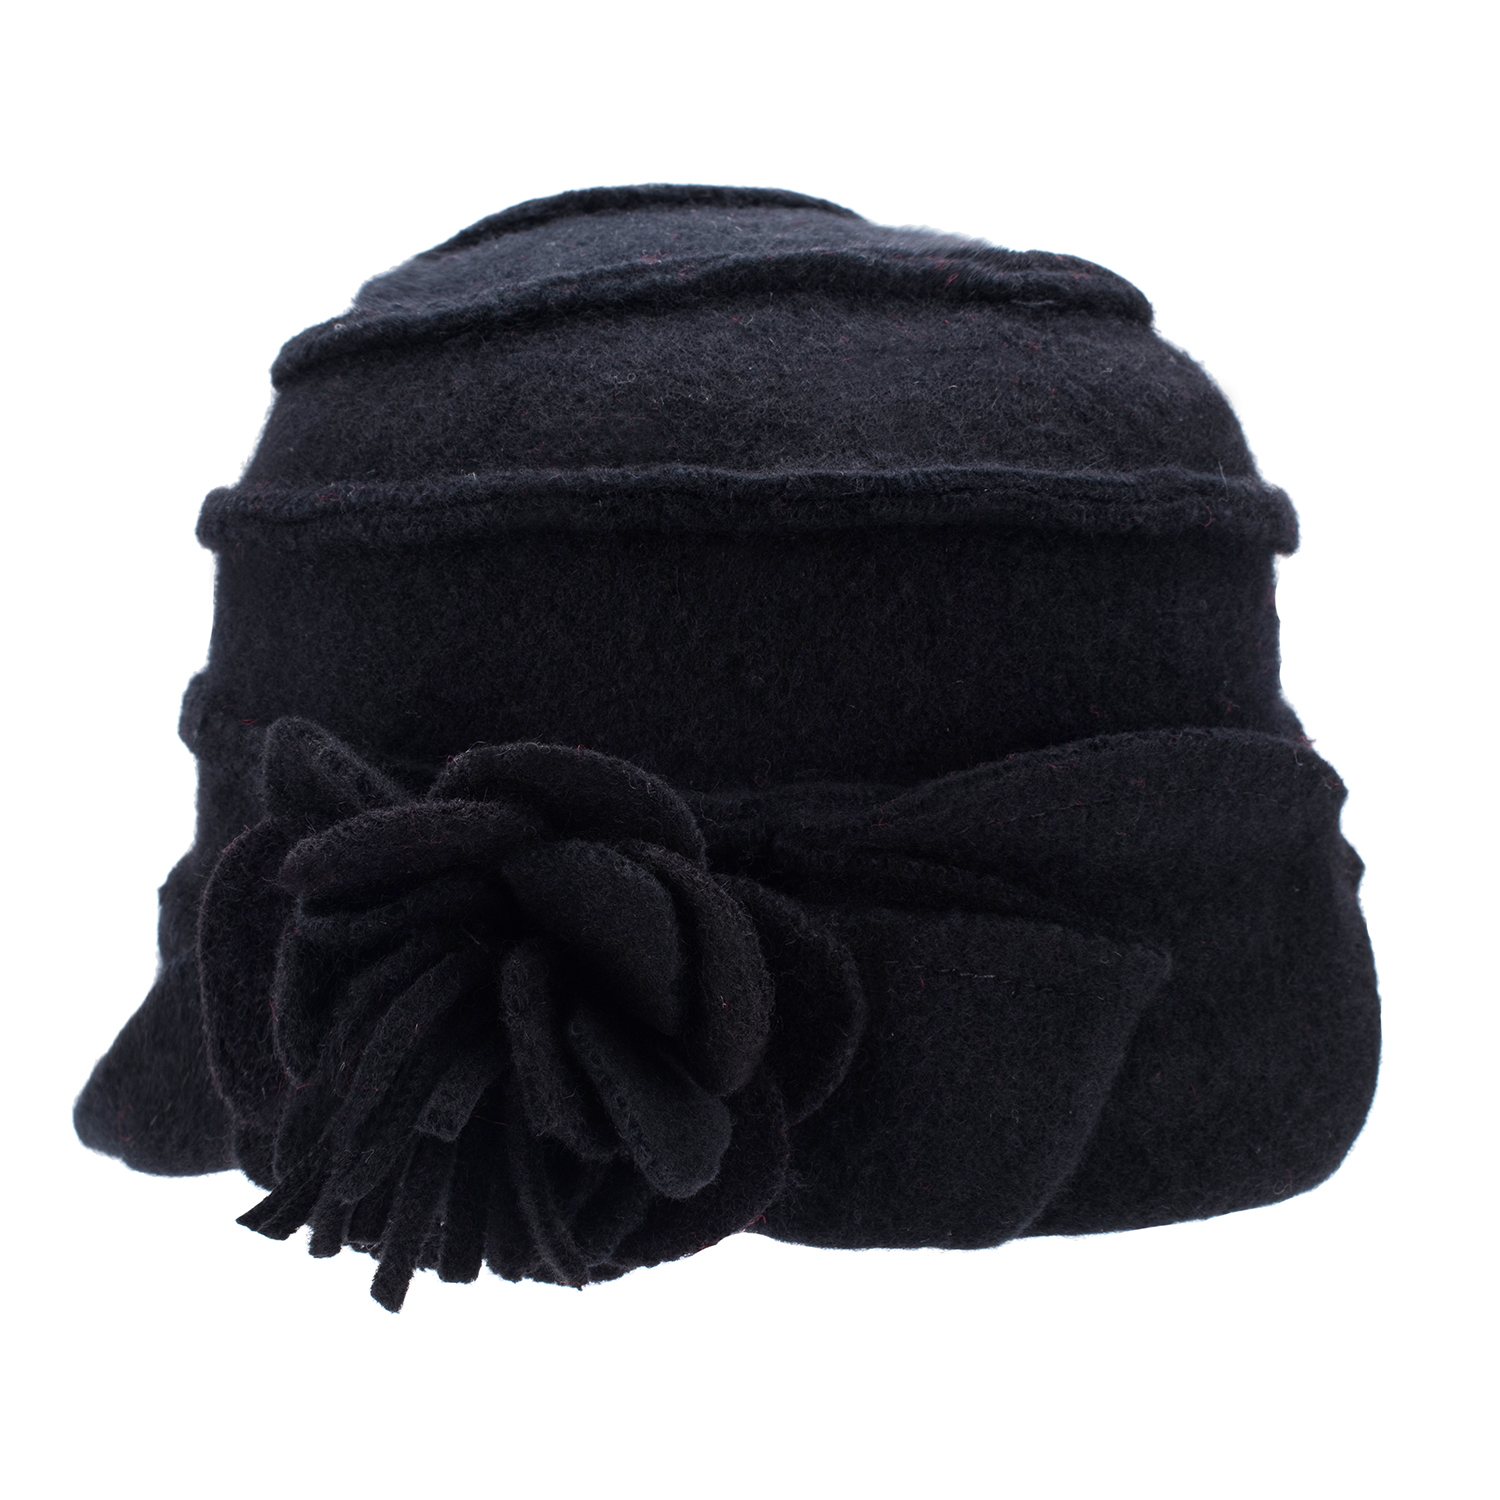 Elegant 1920s Style Ladies Hats Winter Beret Beanie Hats for Women Bucket Cloche Cap 100% Boiled Wool Warm Hats A376